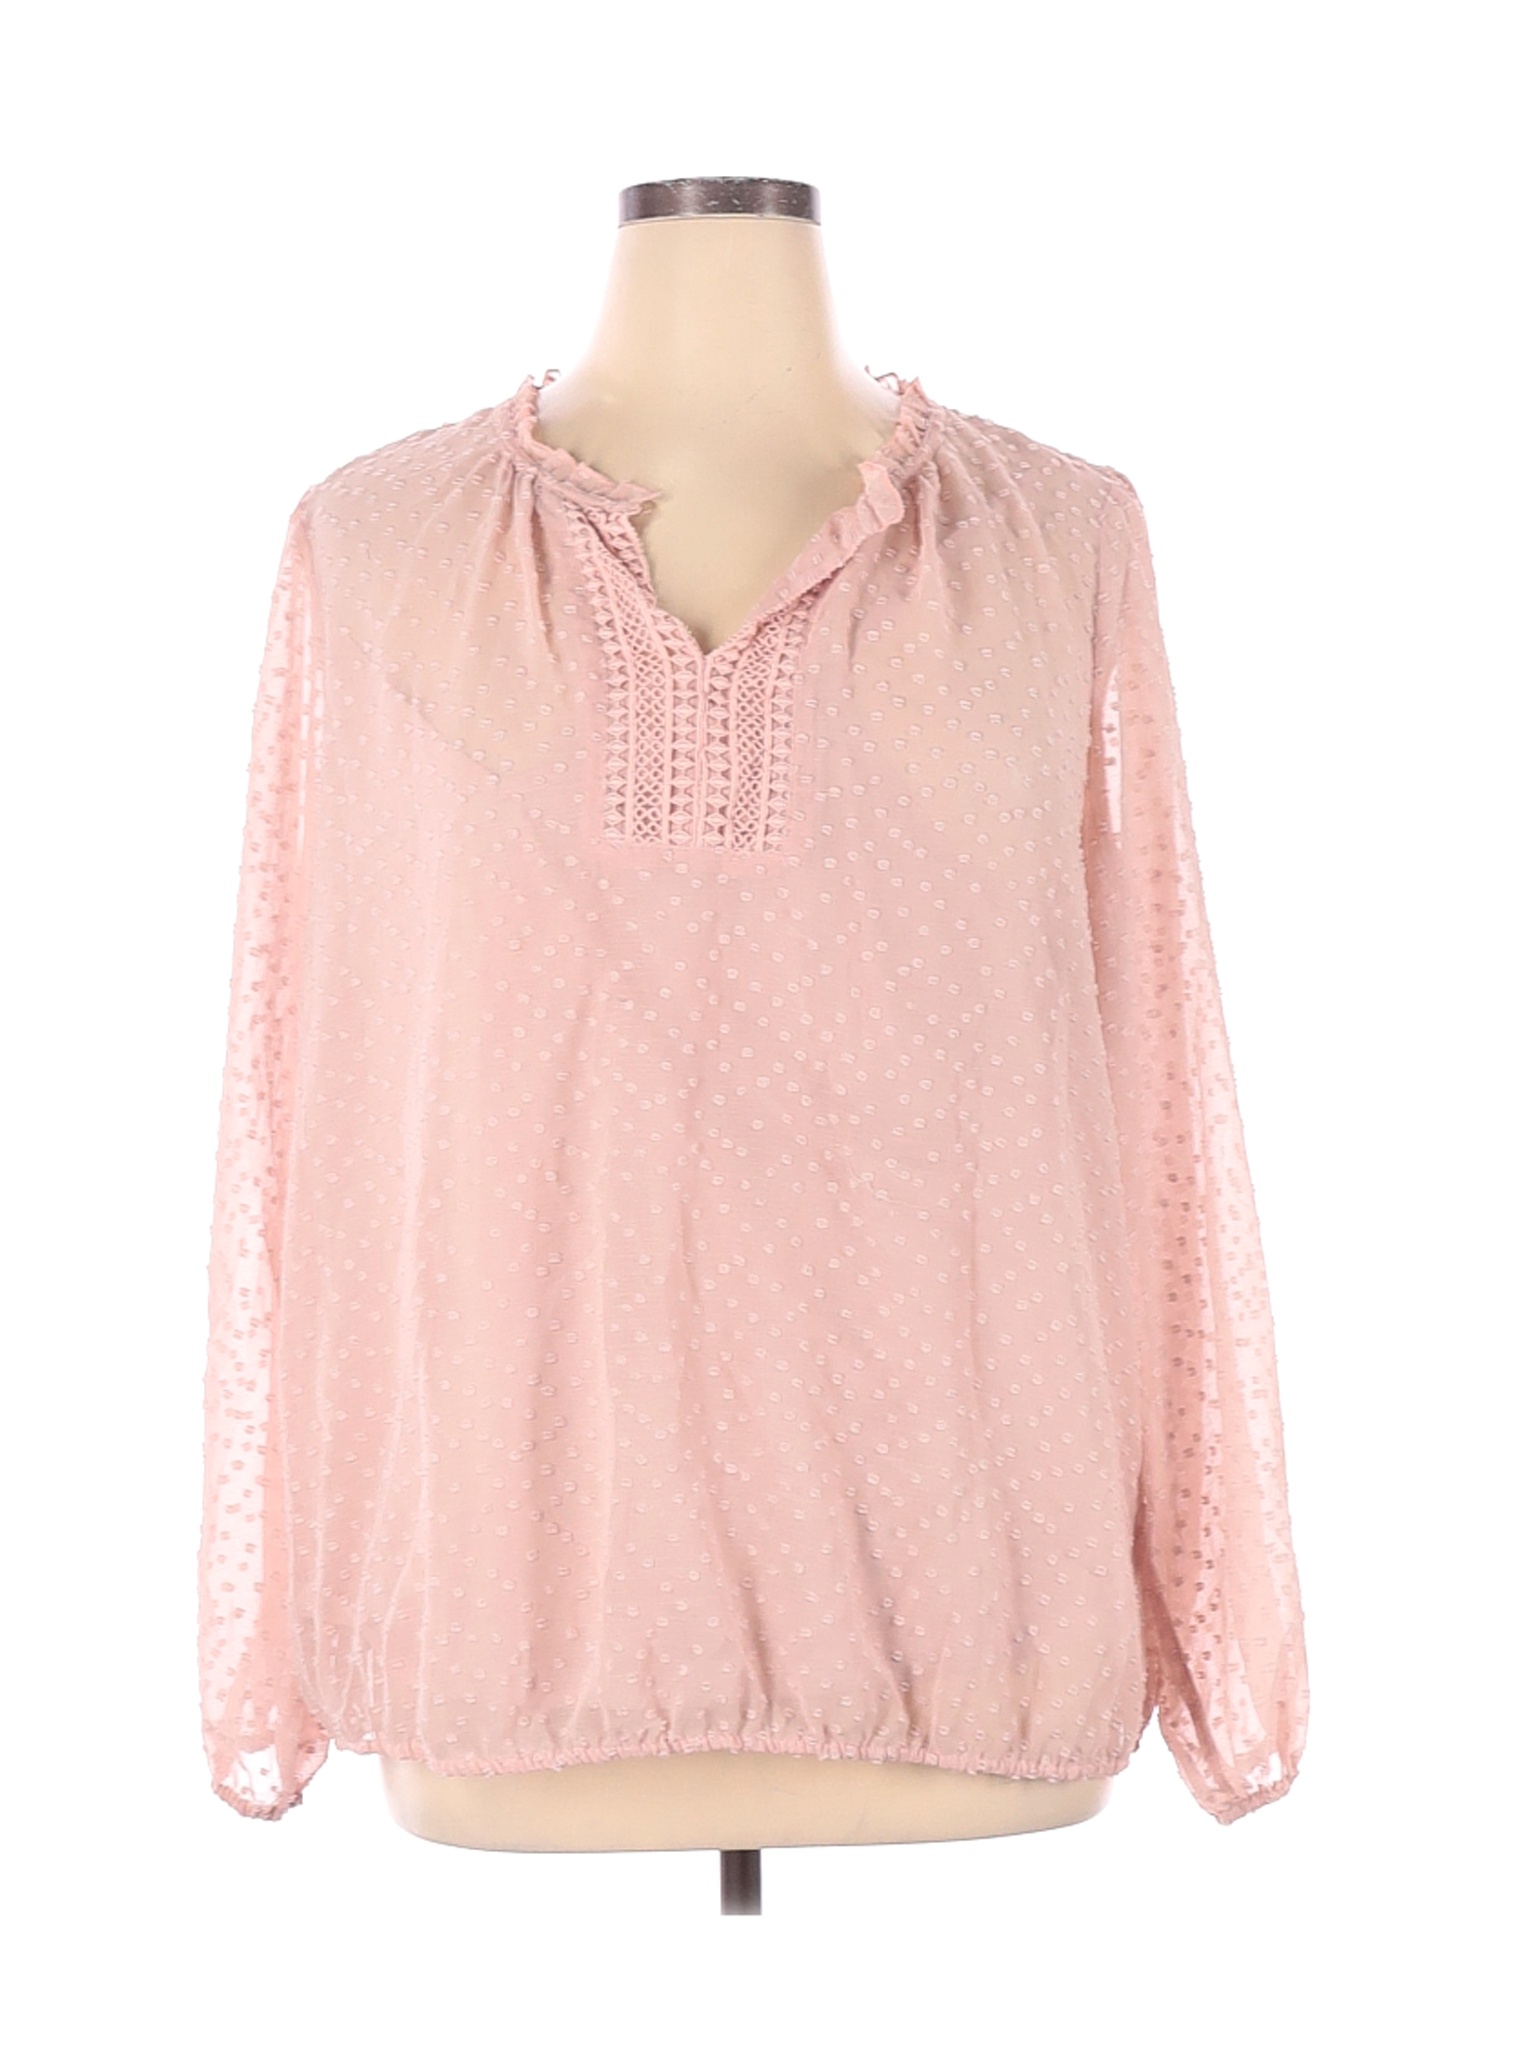 Liz Claiborne Women Pink Long Sleeve Blouse 1X Plus | eBay